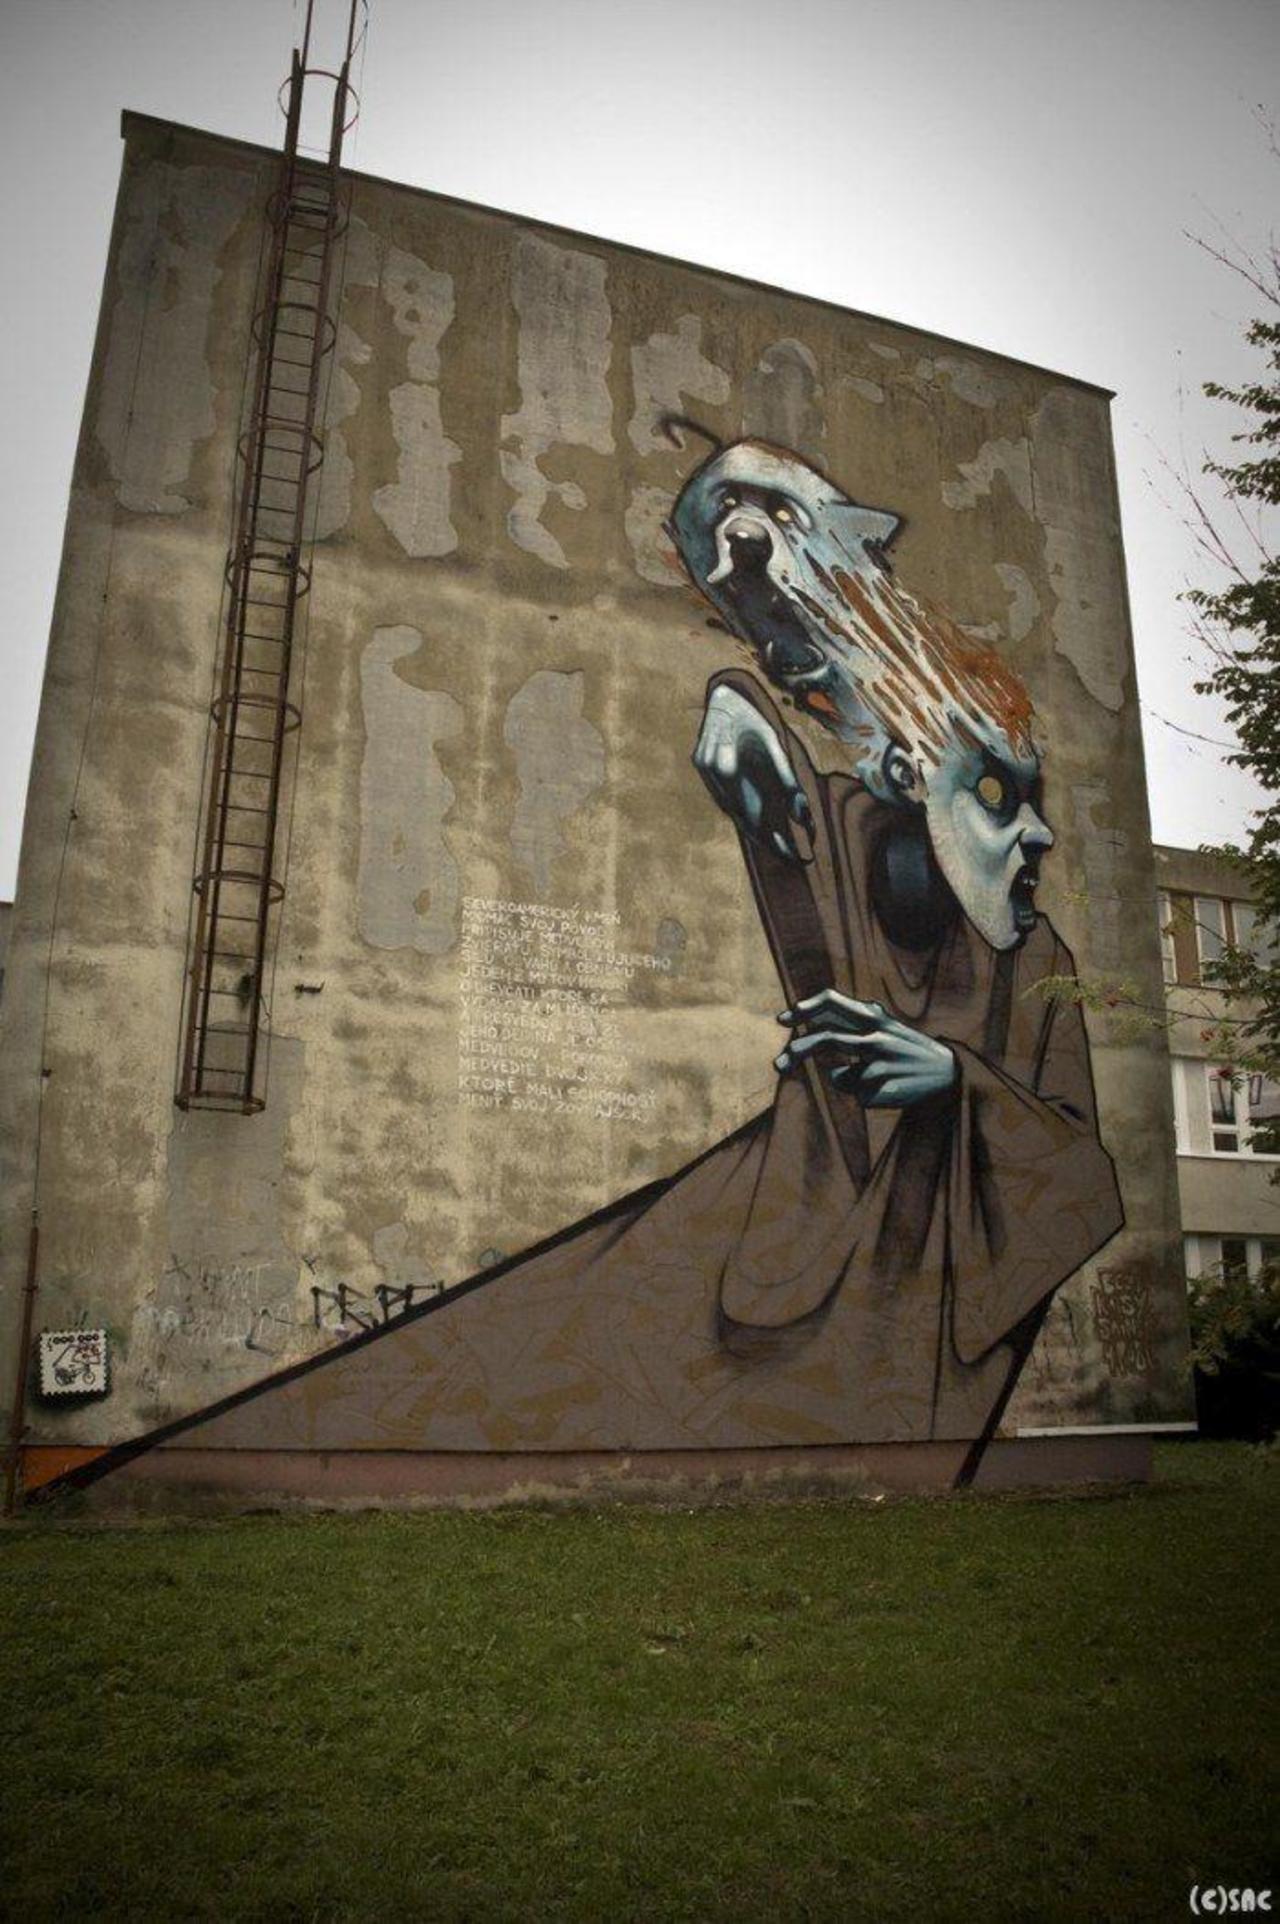 Etam

#Graffiti #StreetArt #Mural #painting #Urban #Art http://t.co/vwfd5rPqhT